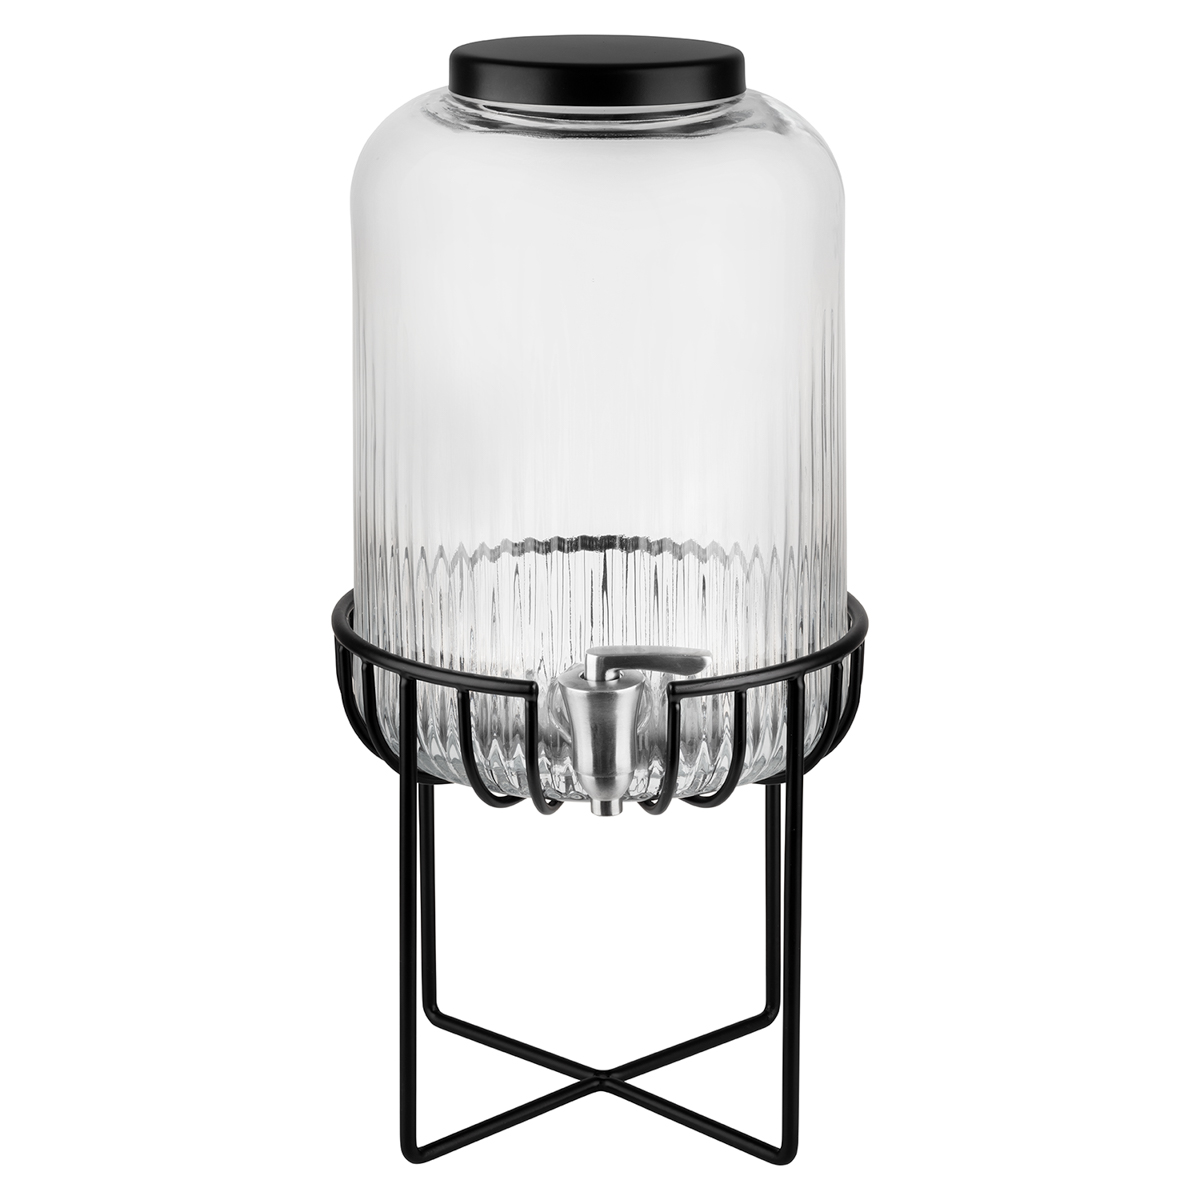 Getränkespender -URBAN-, Ø 22 cm, H, 45 cm, Behälter Glas, Zapfhahn Edelstahl, Gestell Metall, Deckel Edelstahl, 7 Liter